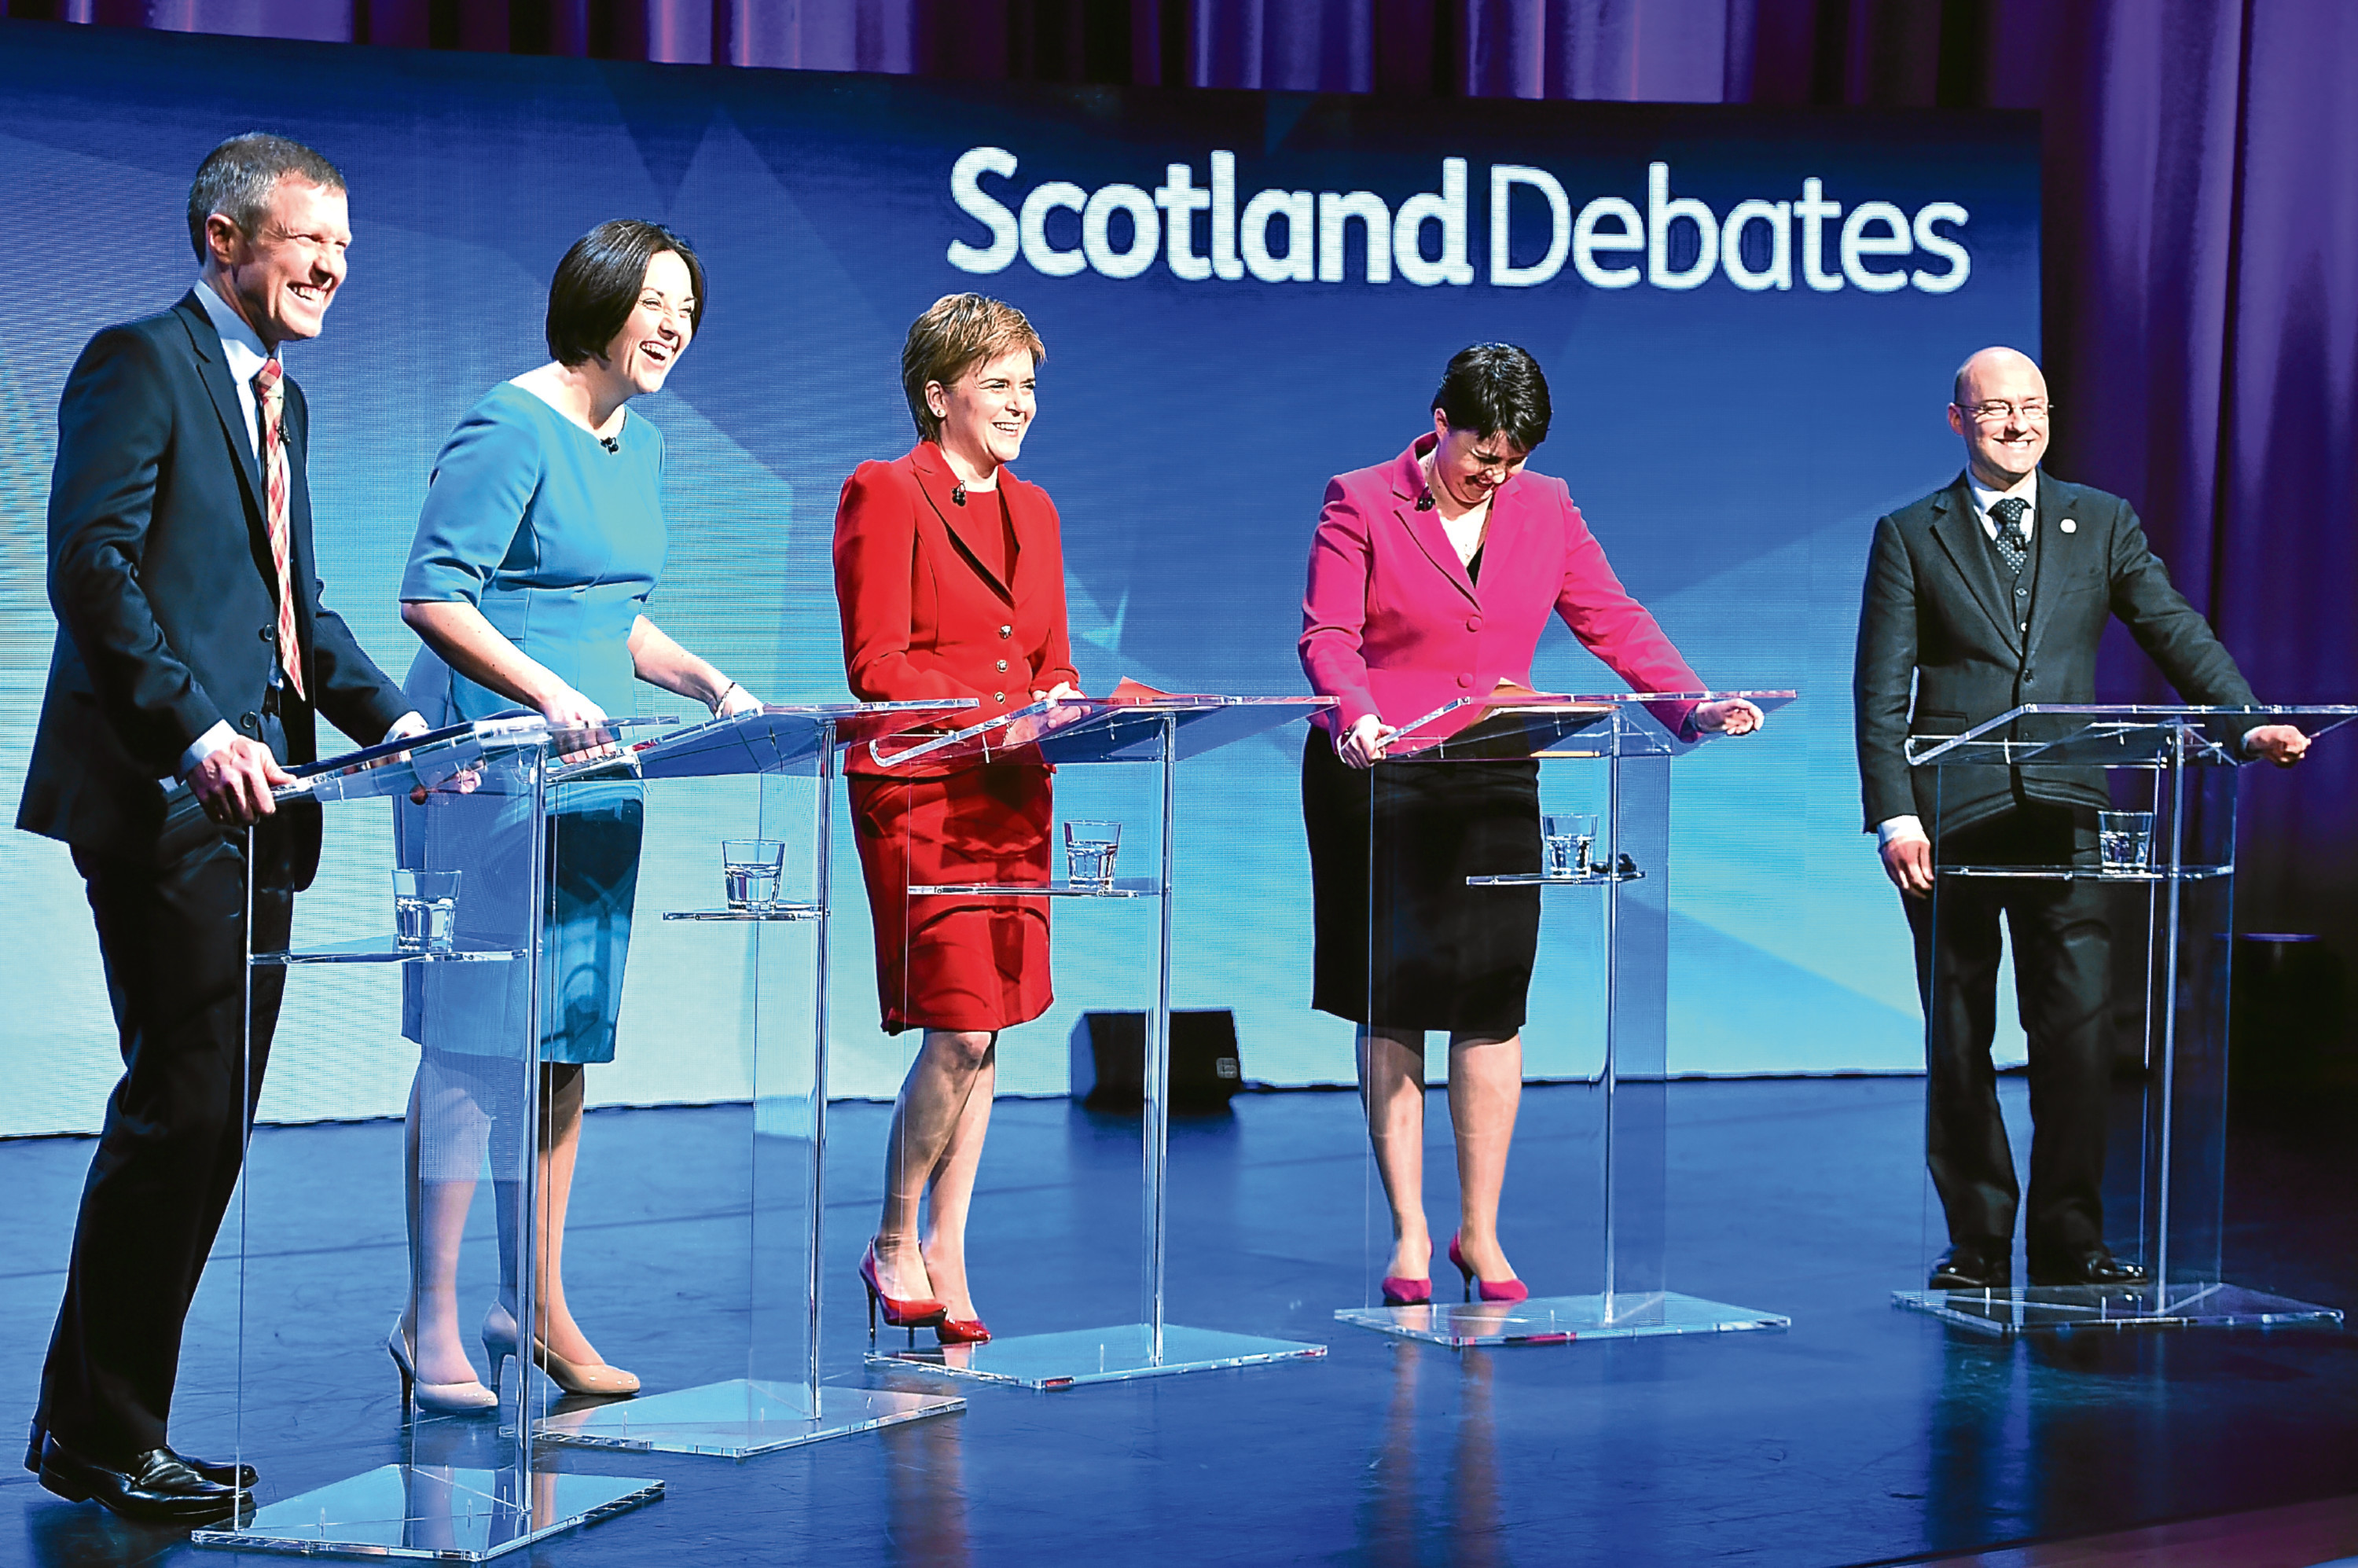 Lib Dem Willie Rennie, Scottish Labour's Kezia Dugdale, SNP leader Nicola Sturgeon, Ruth Davidson of the Scottish Conservatives, and Patrick Harvie of the Scottish Greens attend the STV election debate on March 29, 2016 in Edinburgh, Scotland.